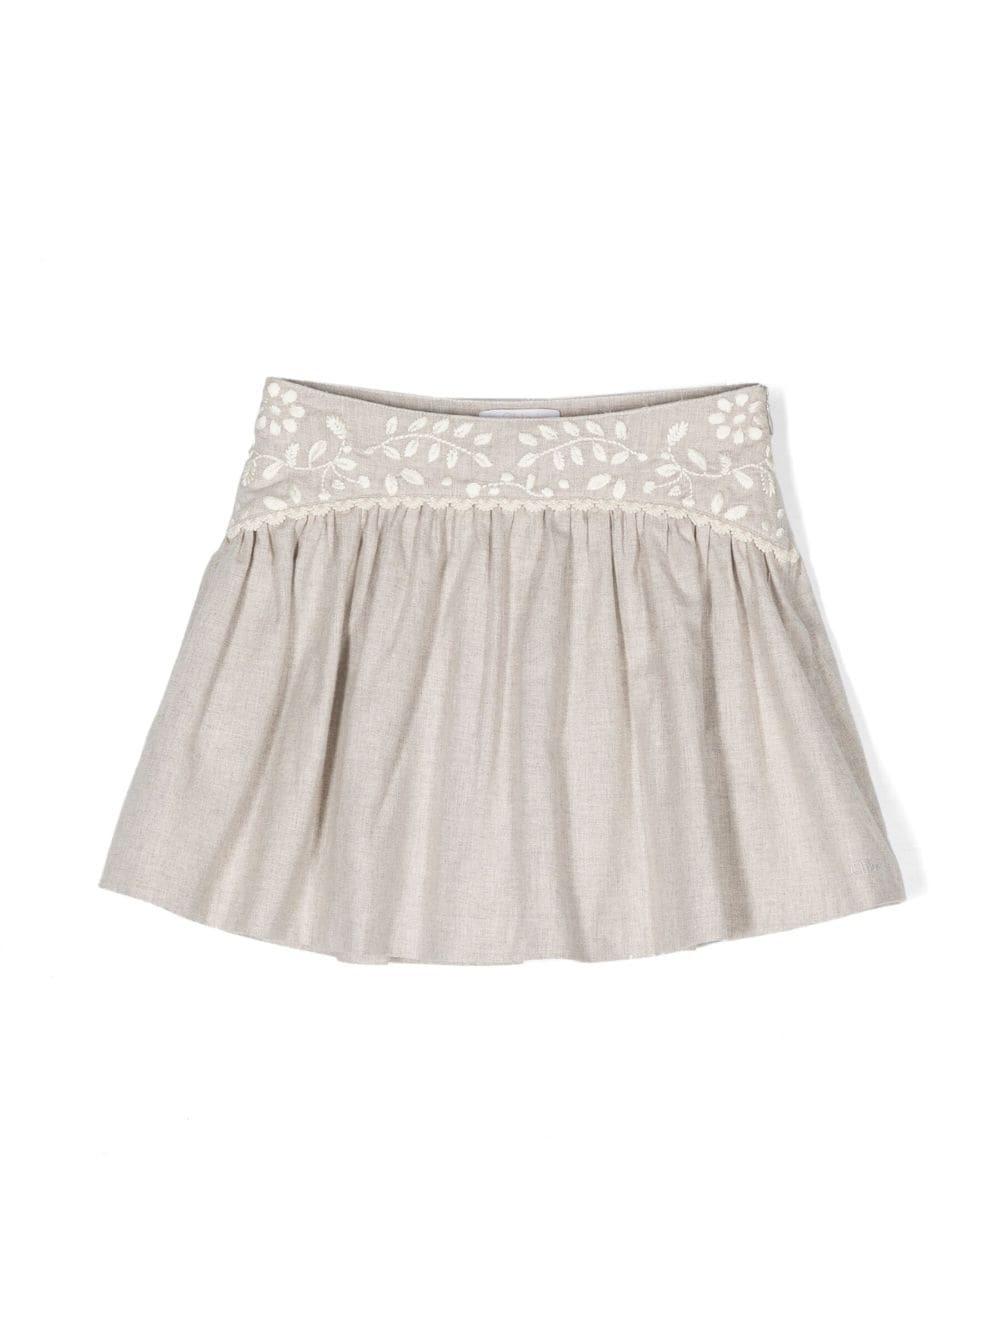 Chloé Kids embroidered cotton skirt - Neutrals